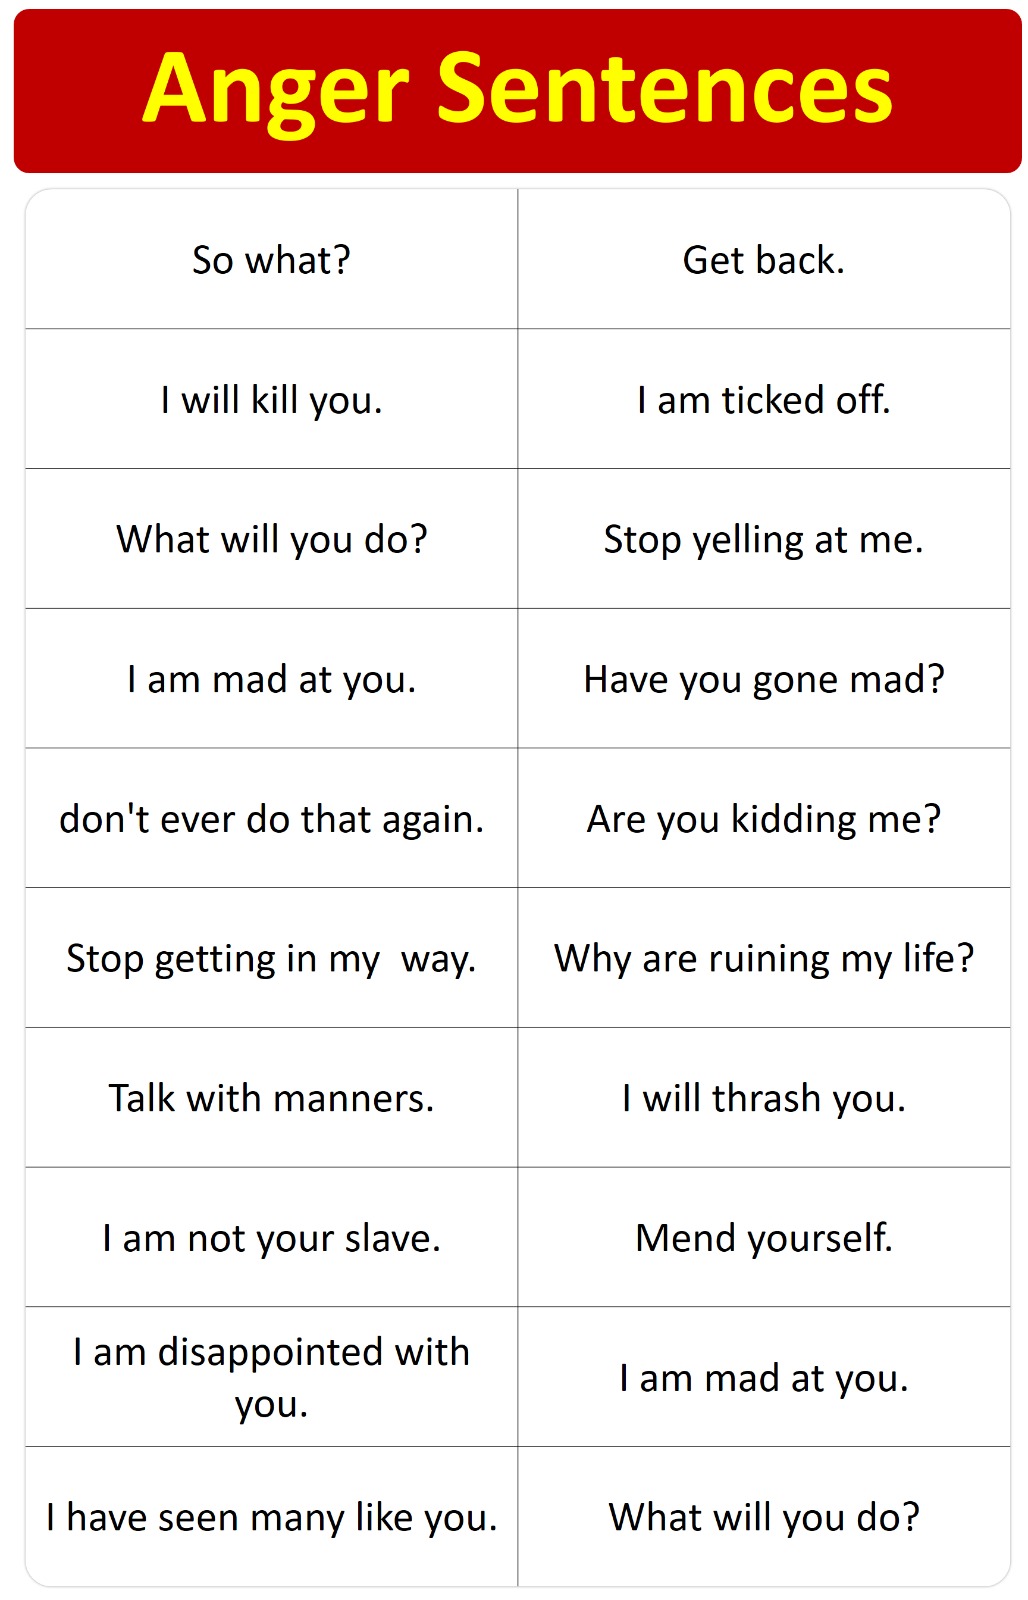 Anger sentences in English